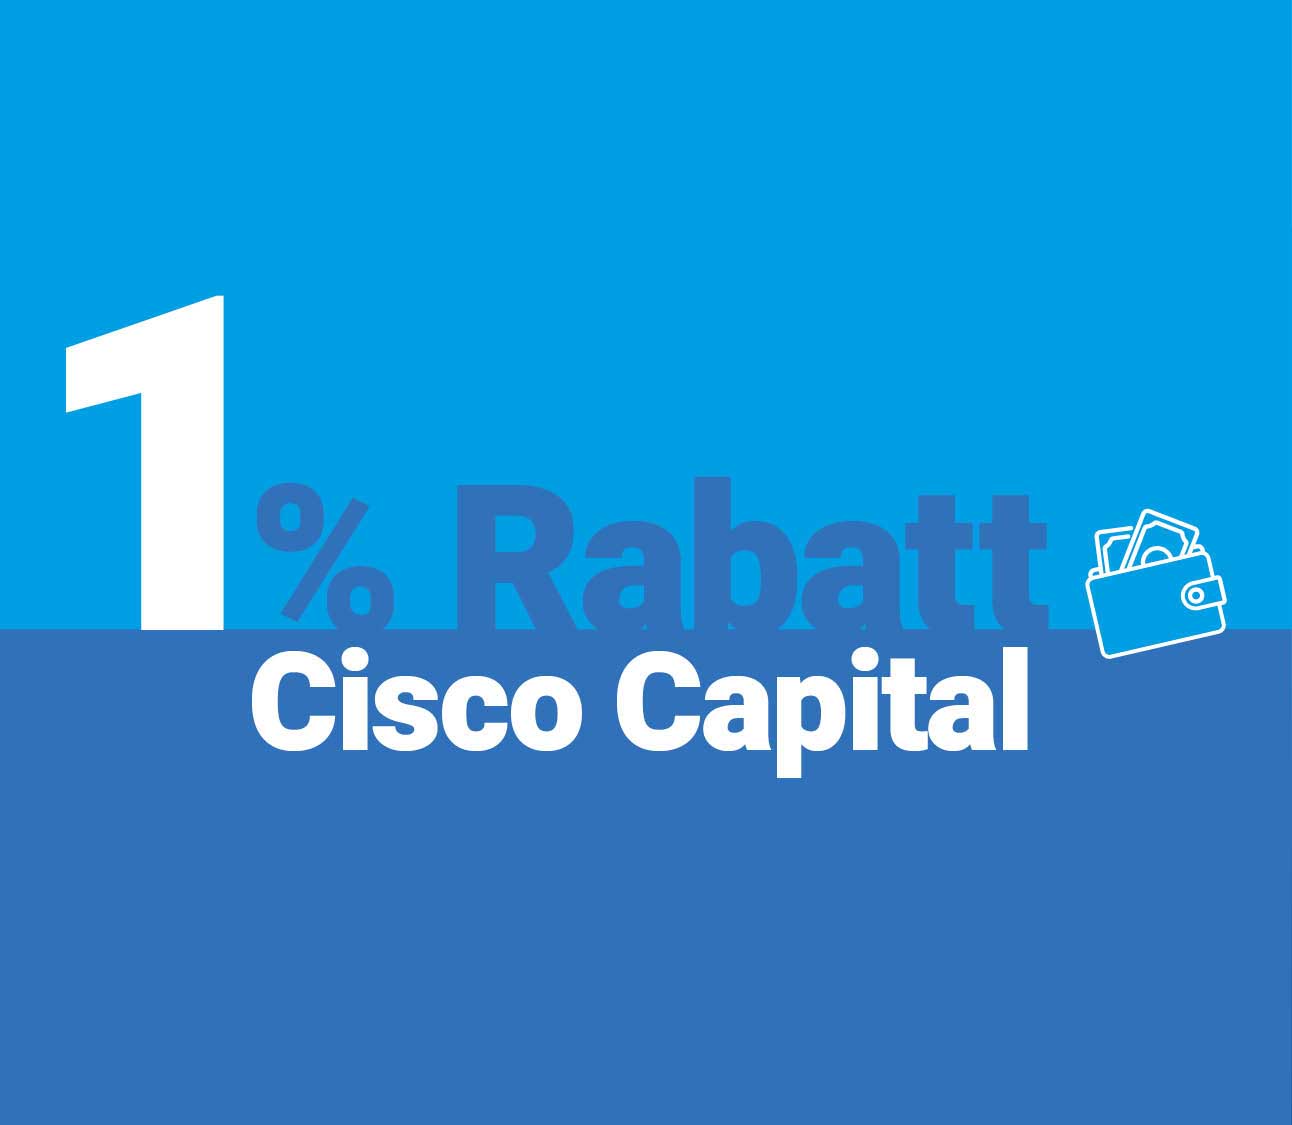 Cisco Capital Featured Image